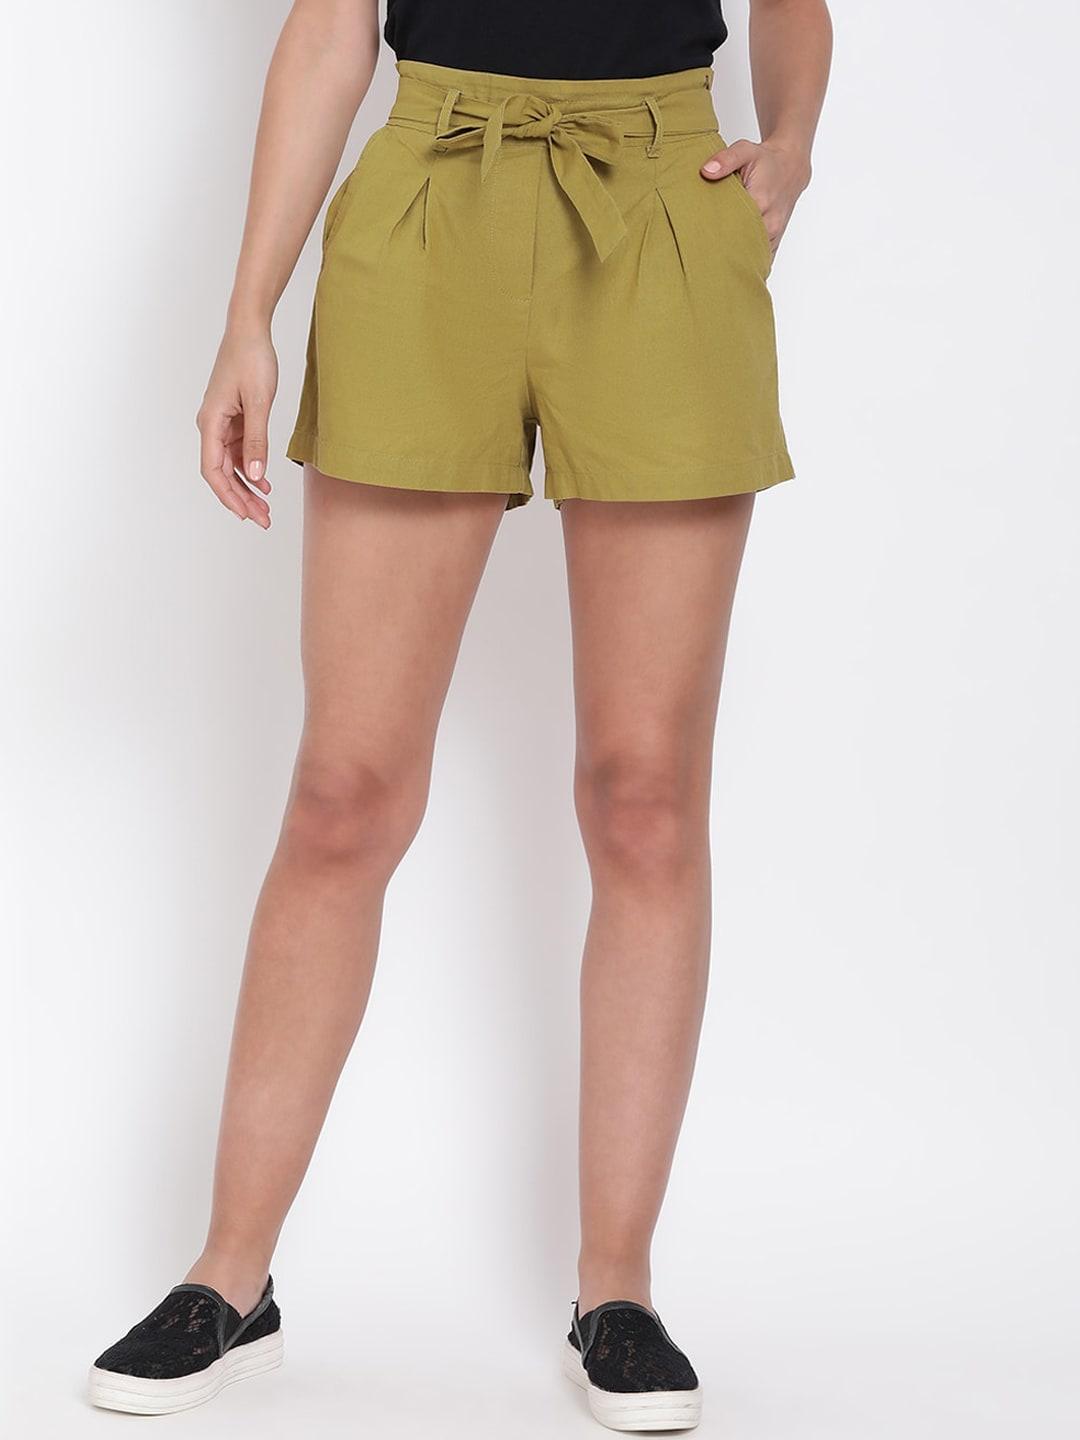 Oxolloxo Women Olive Green Solid Regular Fit Regular Shorts